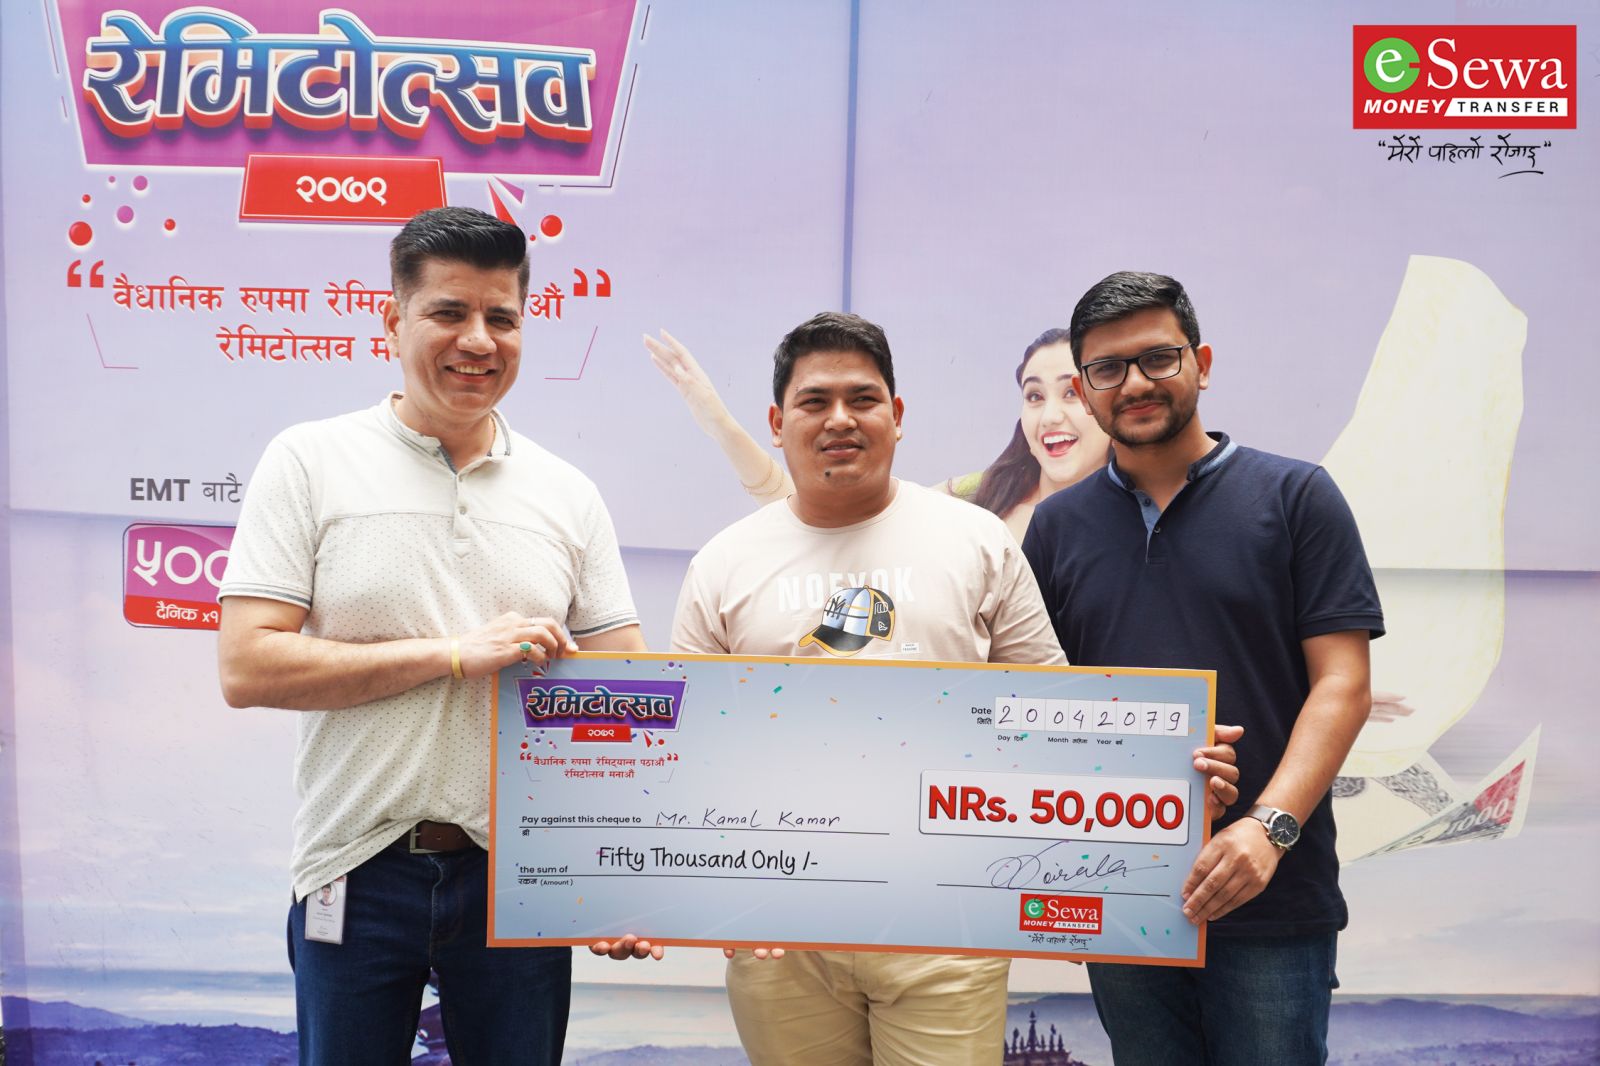 Esewa money transfer successfully concludes Remitutsav, bumper prize winner was Gorkha’s Kamal Kamar